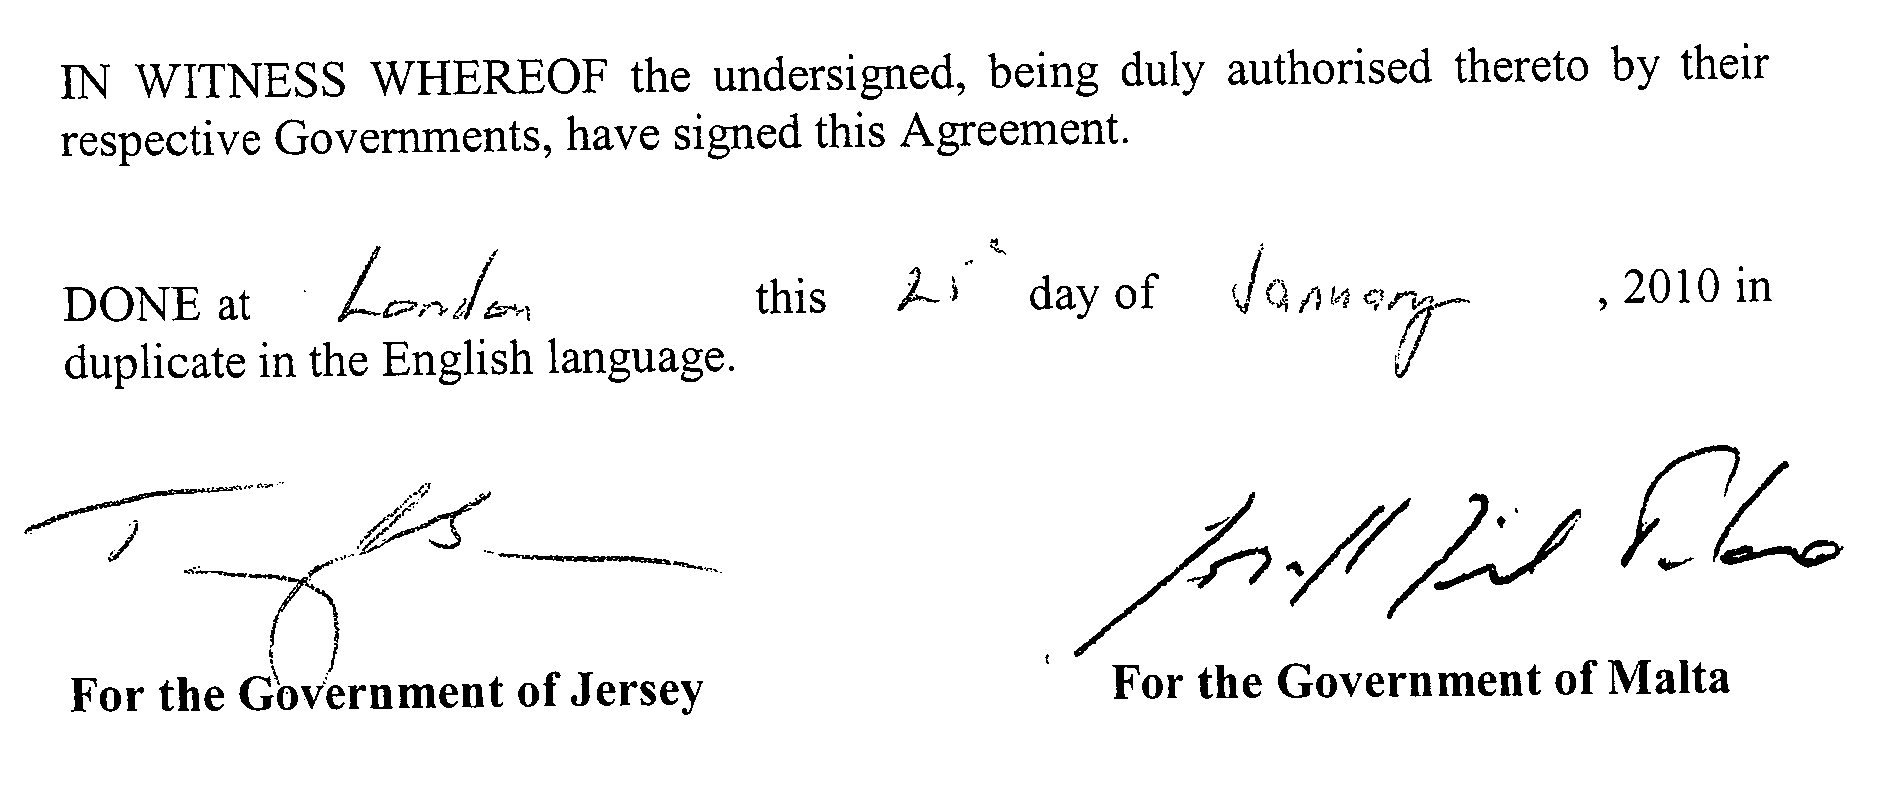 Image of signatories